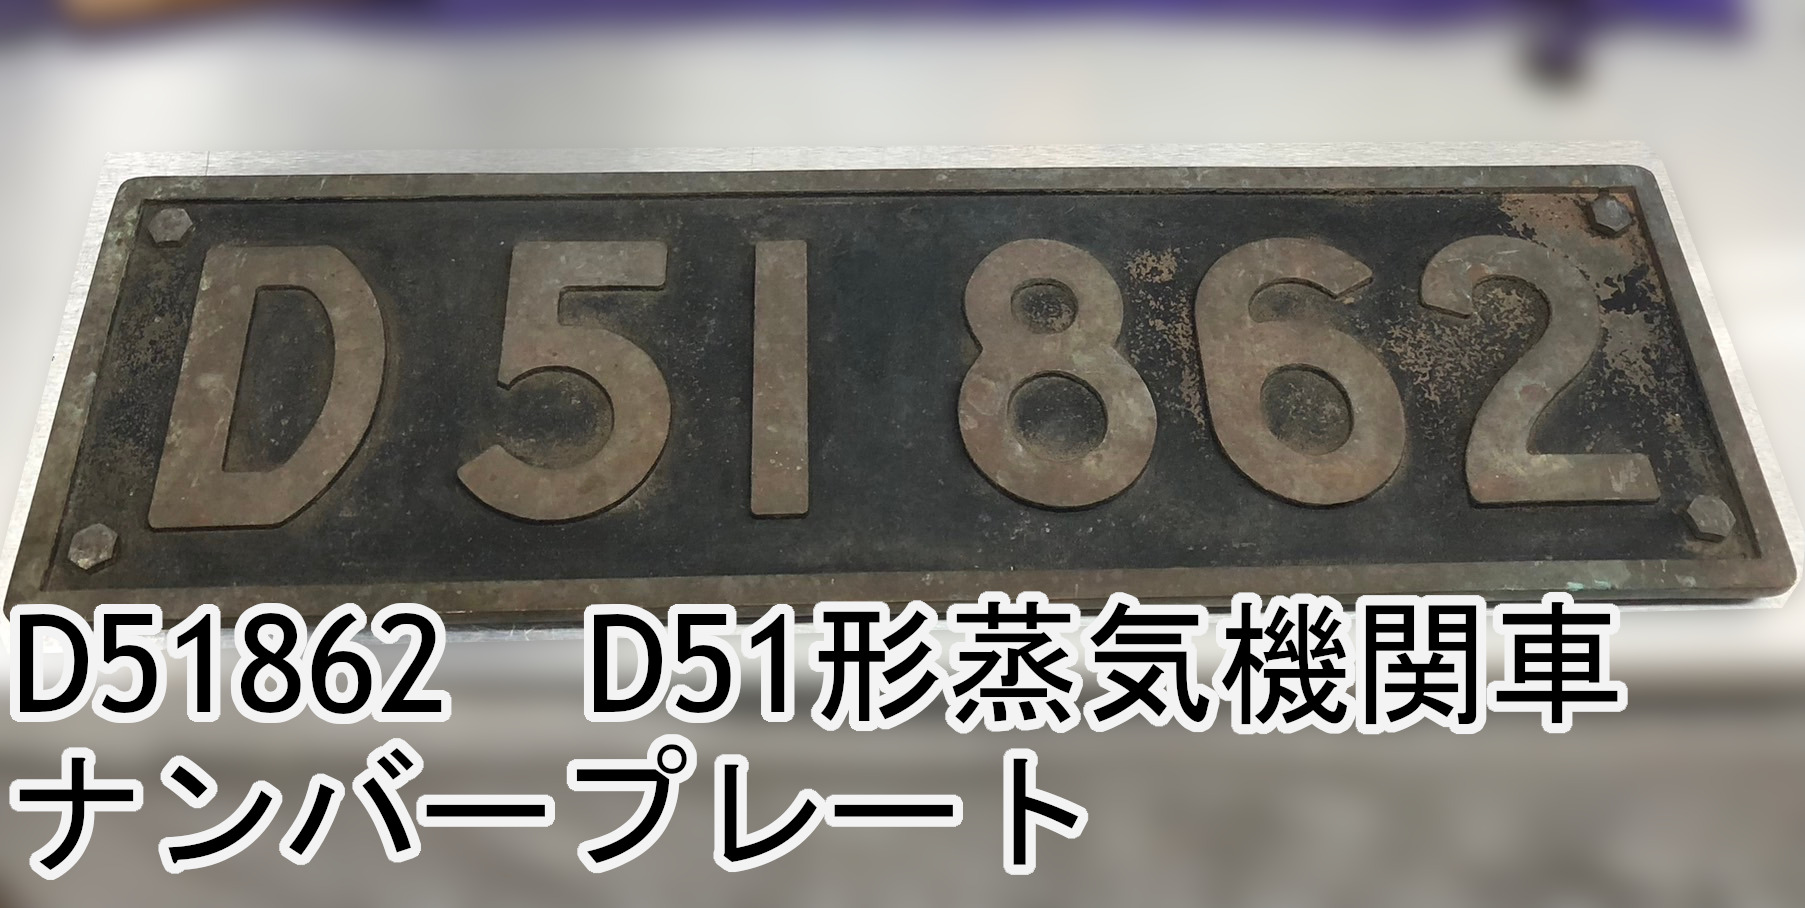 ▽D51862 D51形蒸気機関車 デゴイチ ナンバープレート お買取 販売